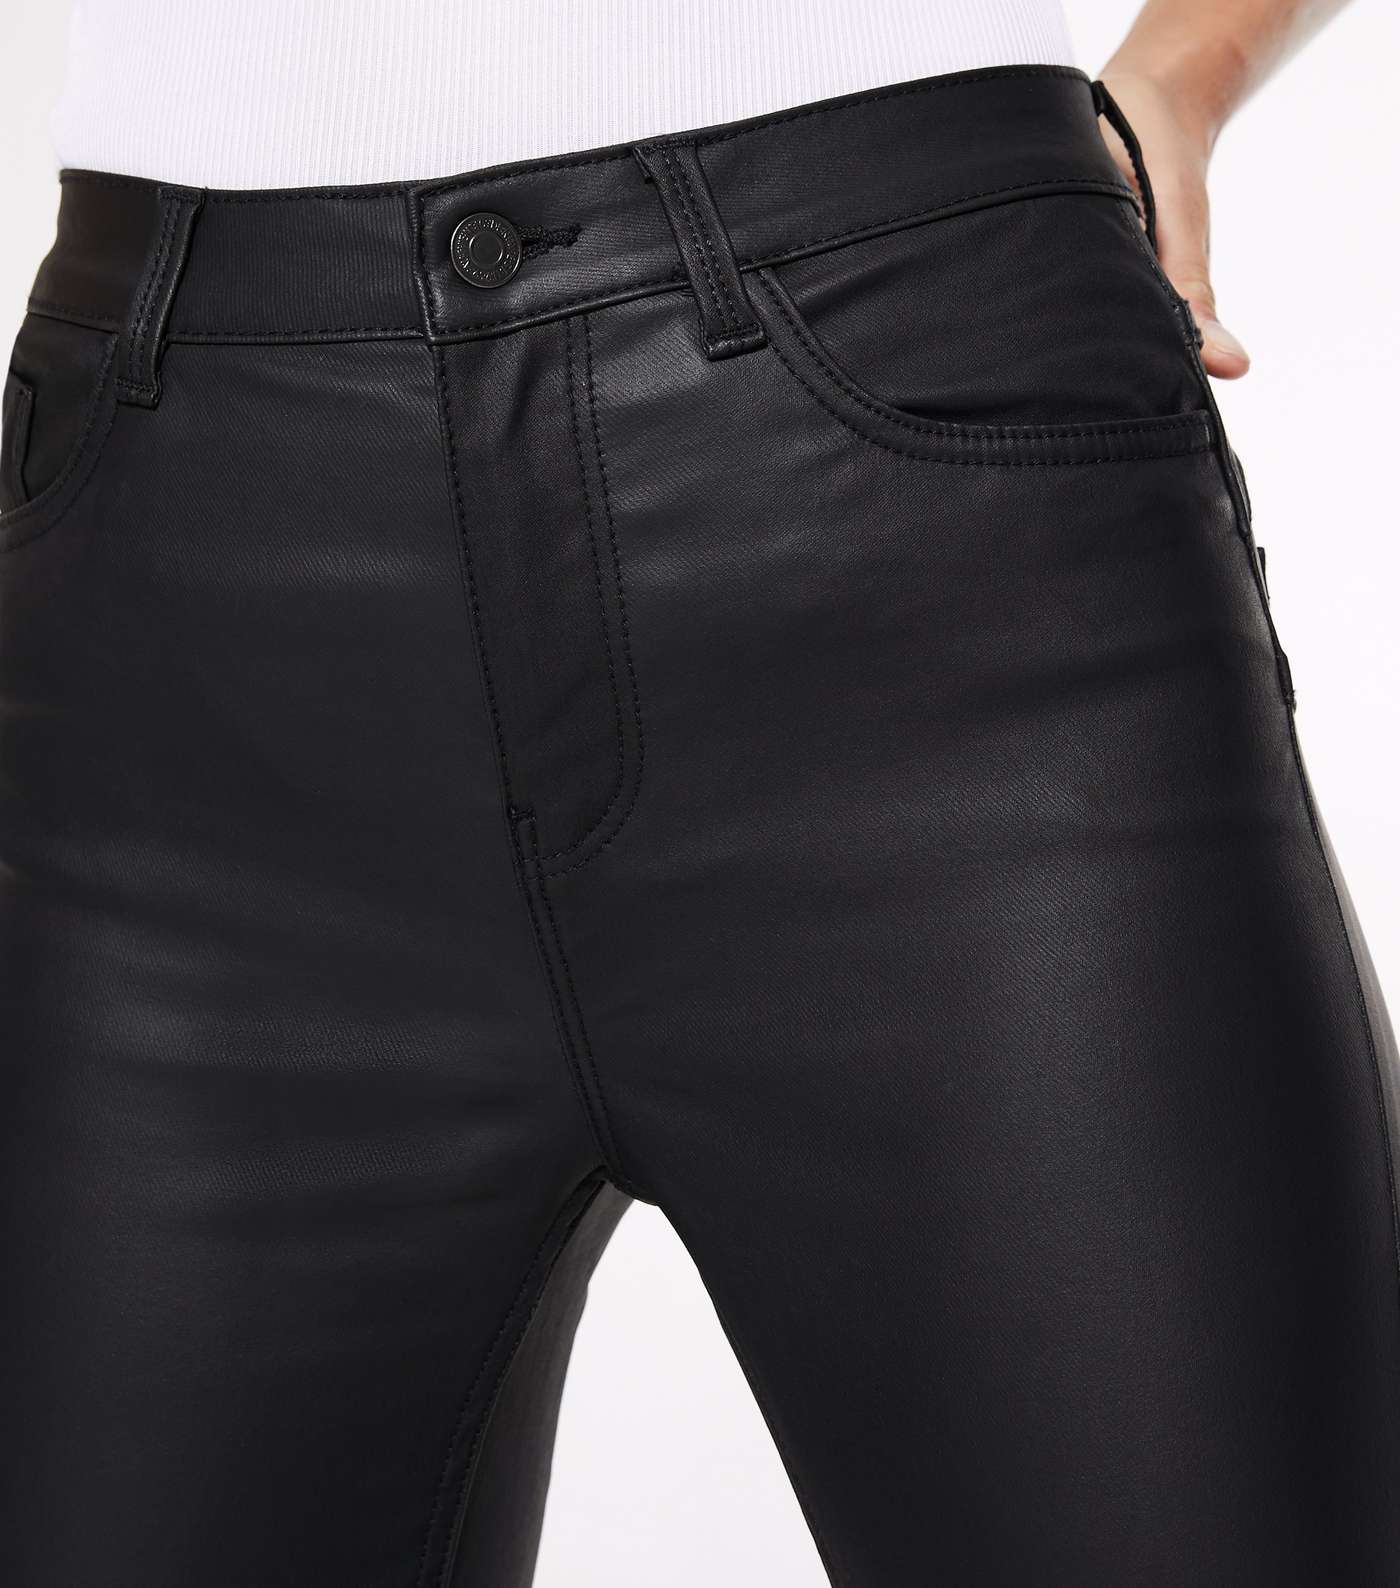 Petite Black Coated Leather-Look 'Lift & Shape' Jenna Skinny Jeans Image 3